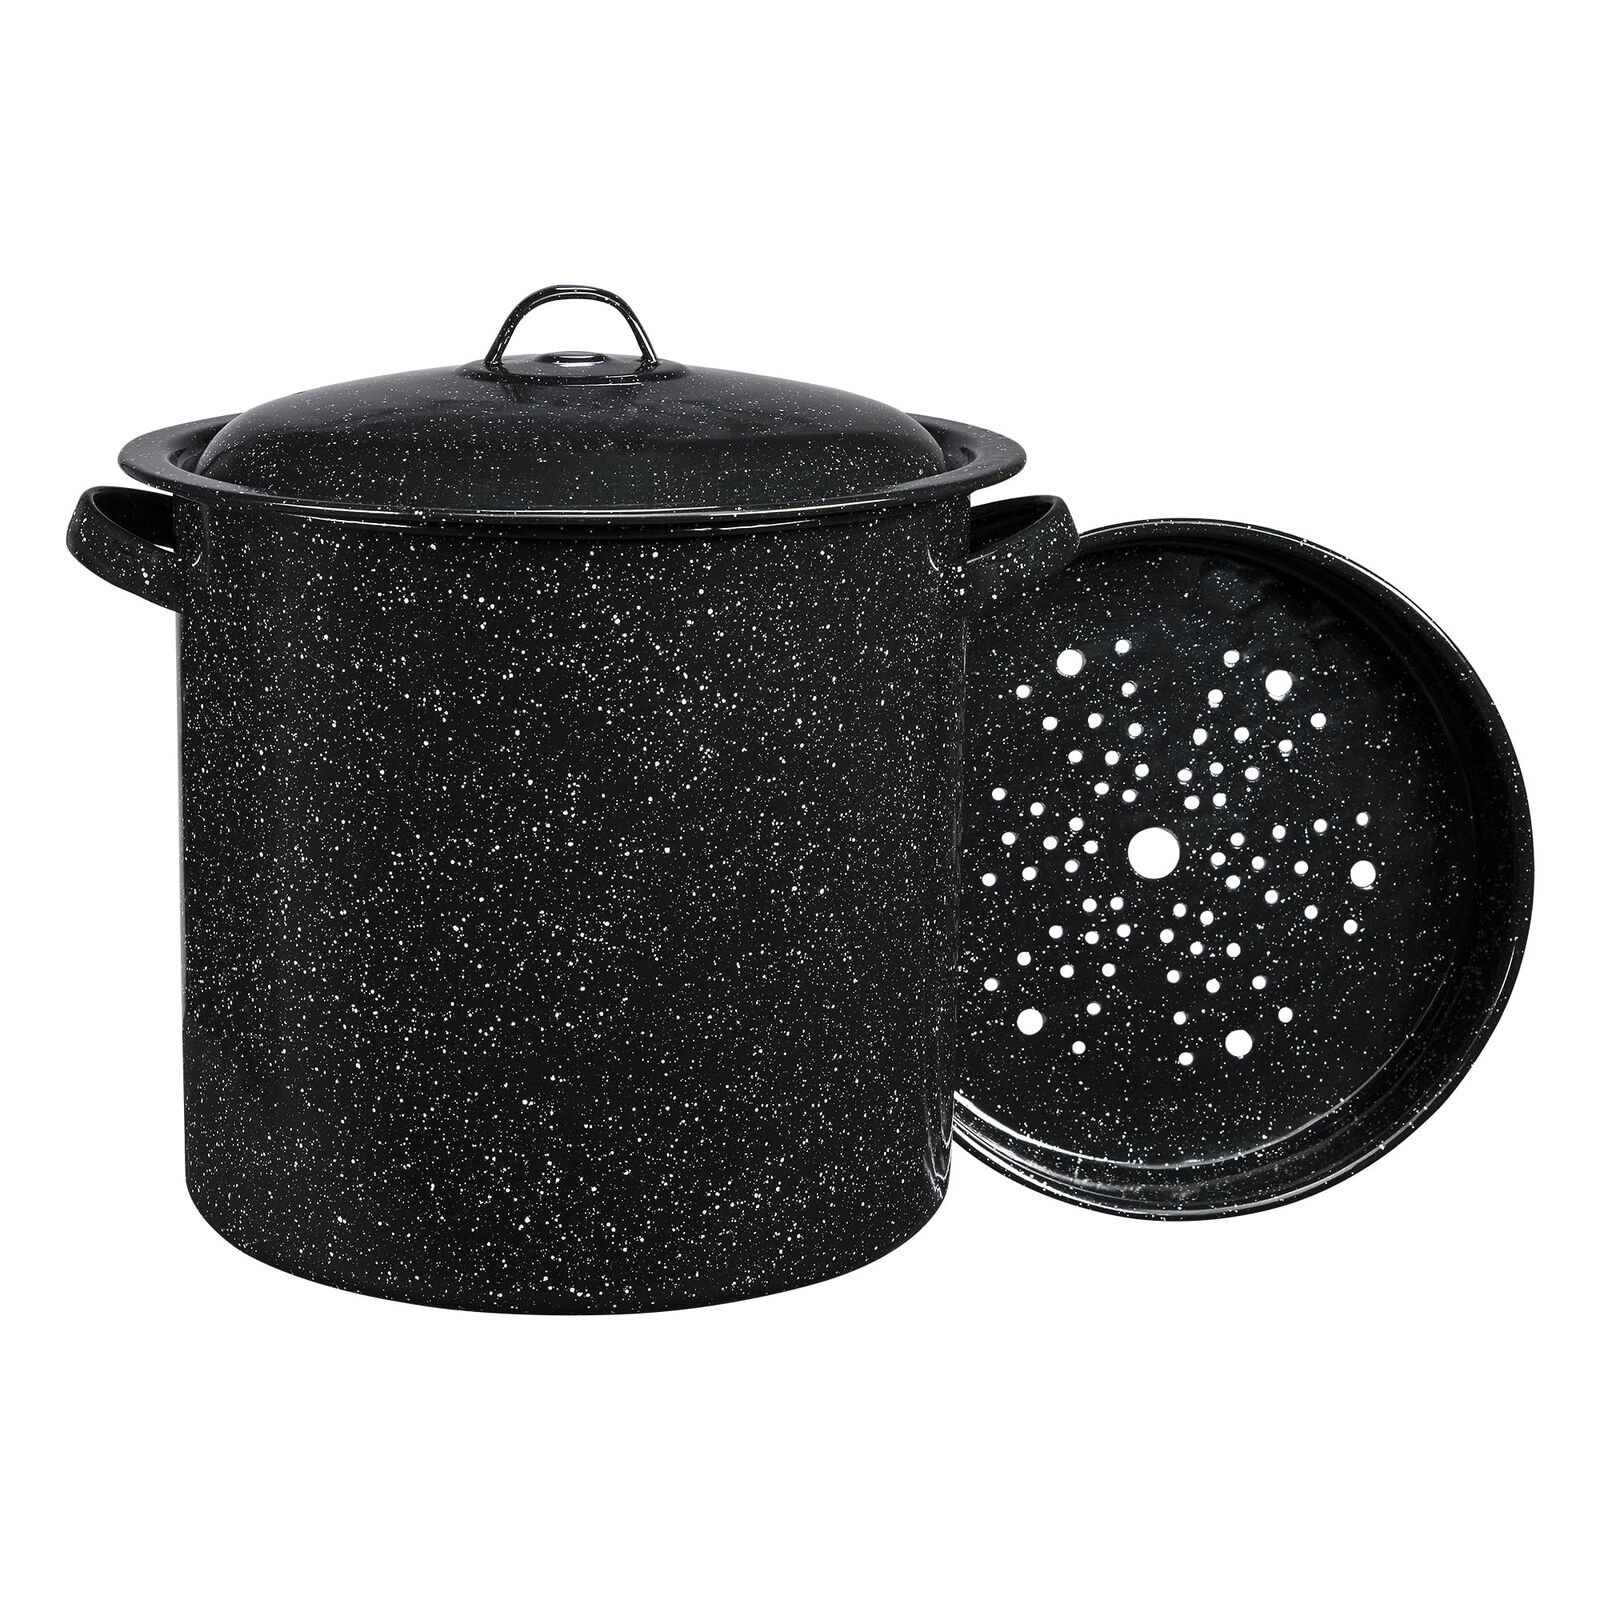 Multipurpose pot, seafood/tamale/Stock pot includes steamer, 15.5 quart, black